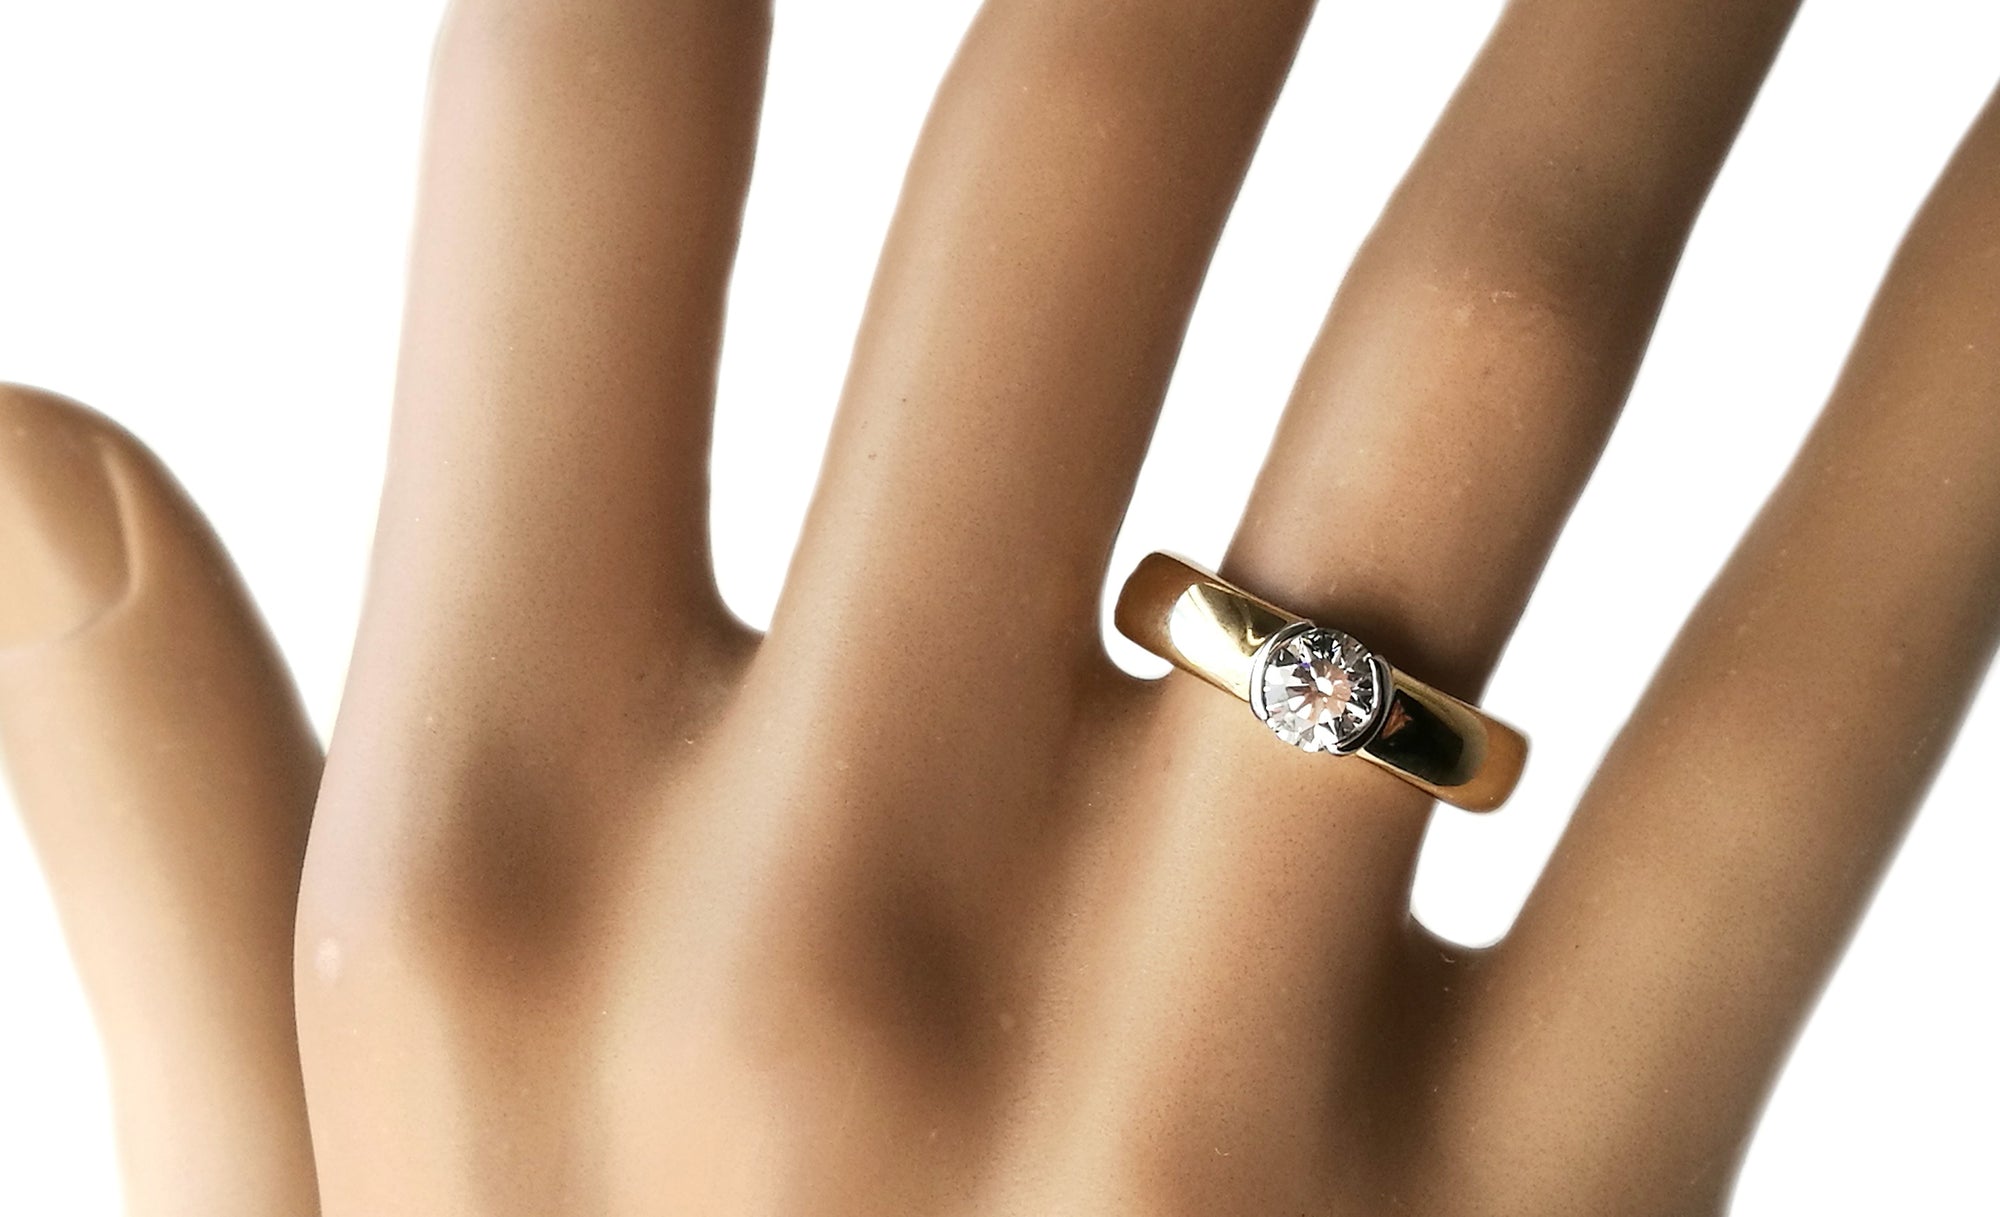 Tiffany & Co. 0.53ct F/VS1 'Etoile' Diamond Engagement Ring in 18k Yellow Gold